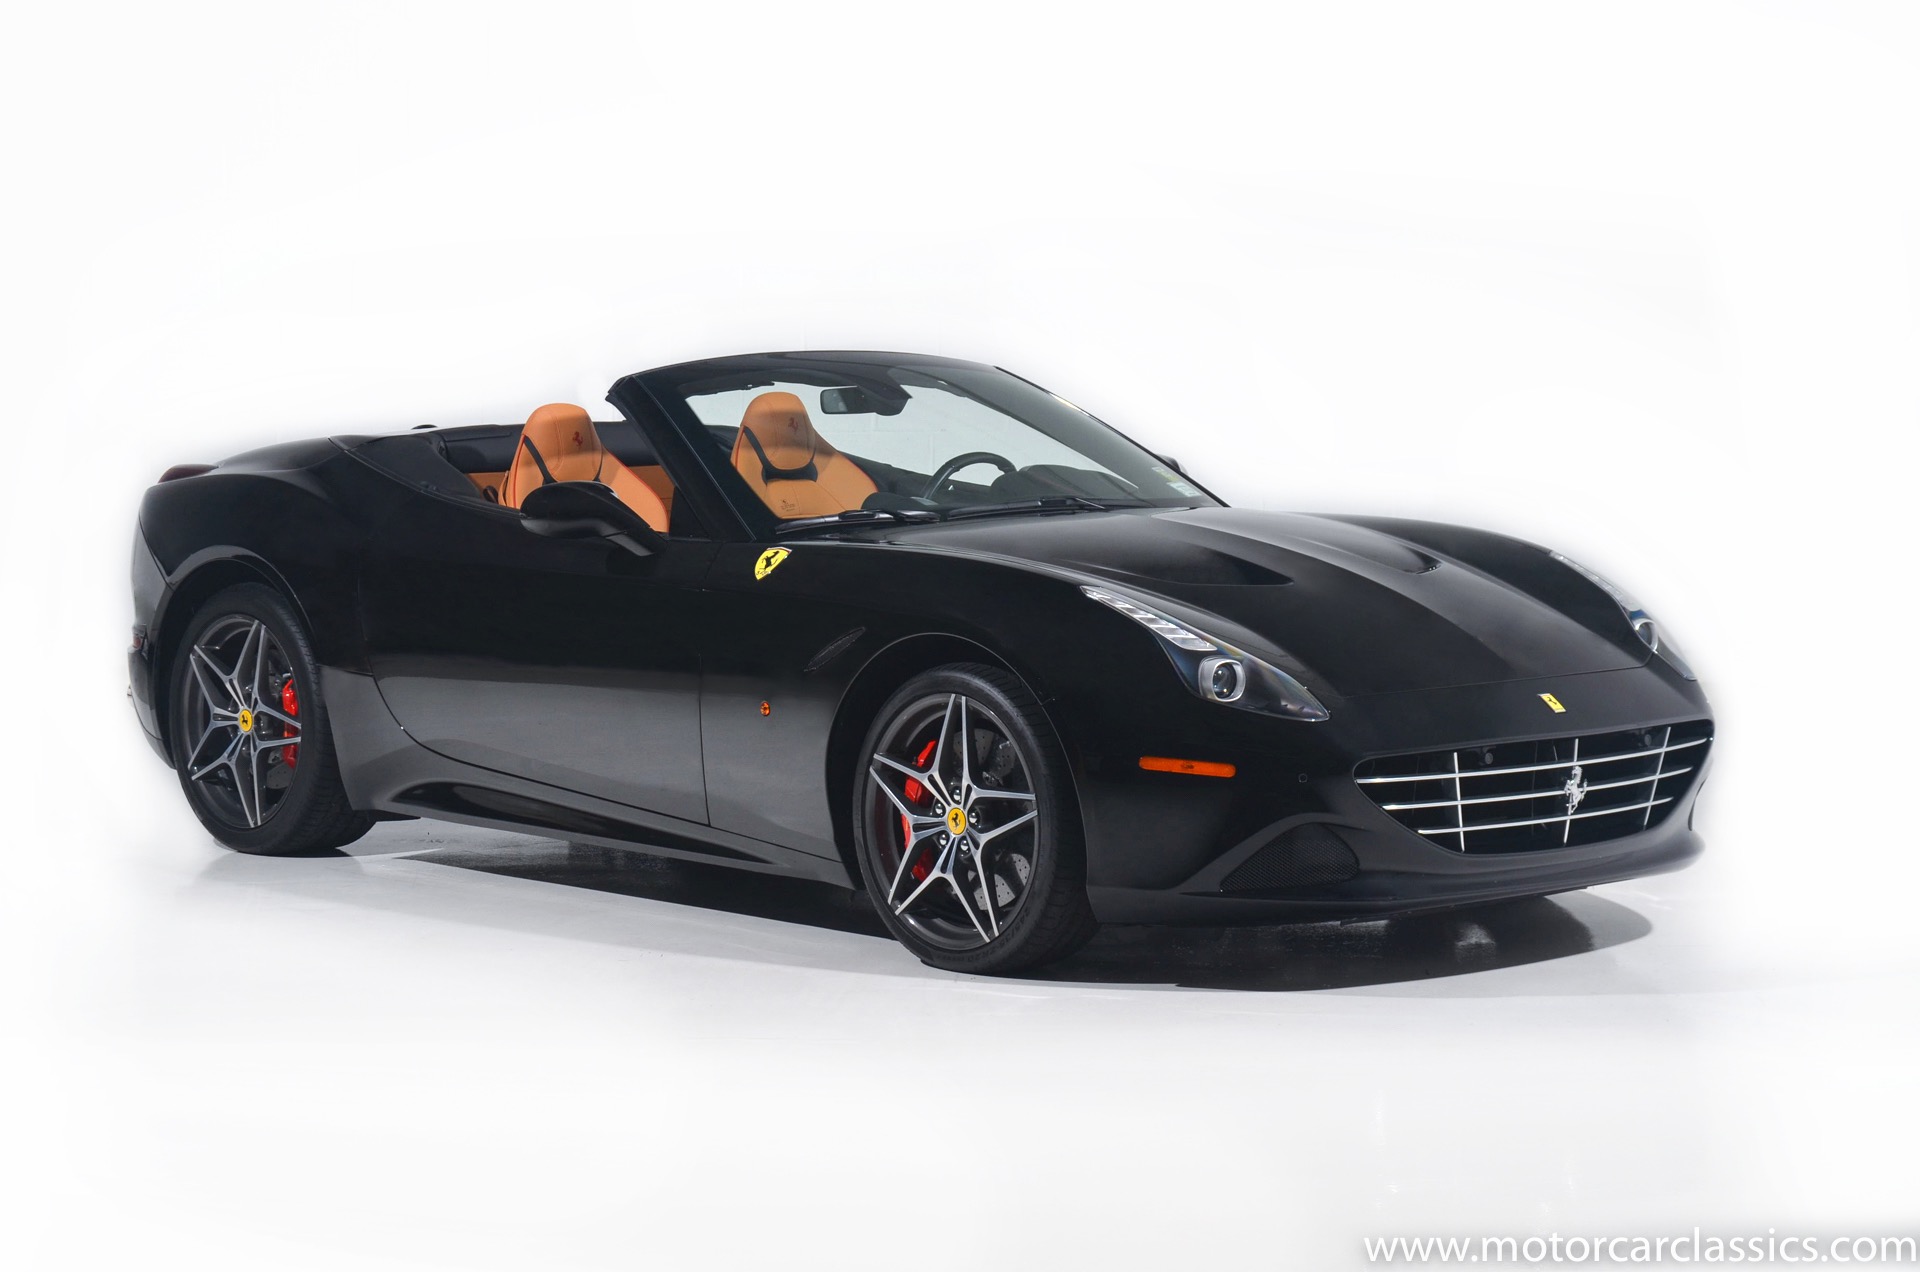 Used 2018 Ferrari California T For Sale ($184,900) | Motorcar Classics  Stock #1292